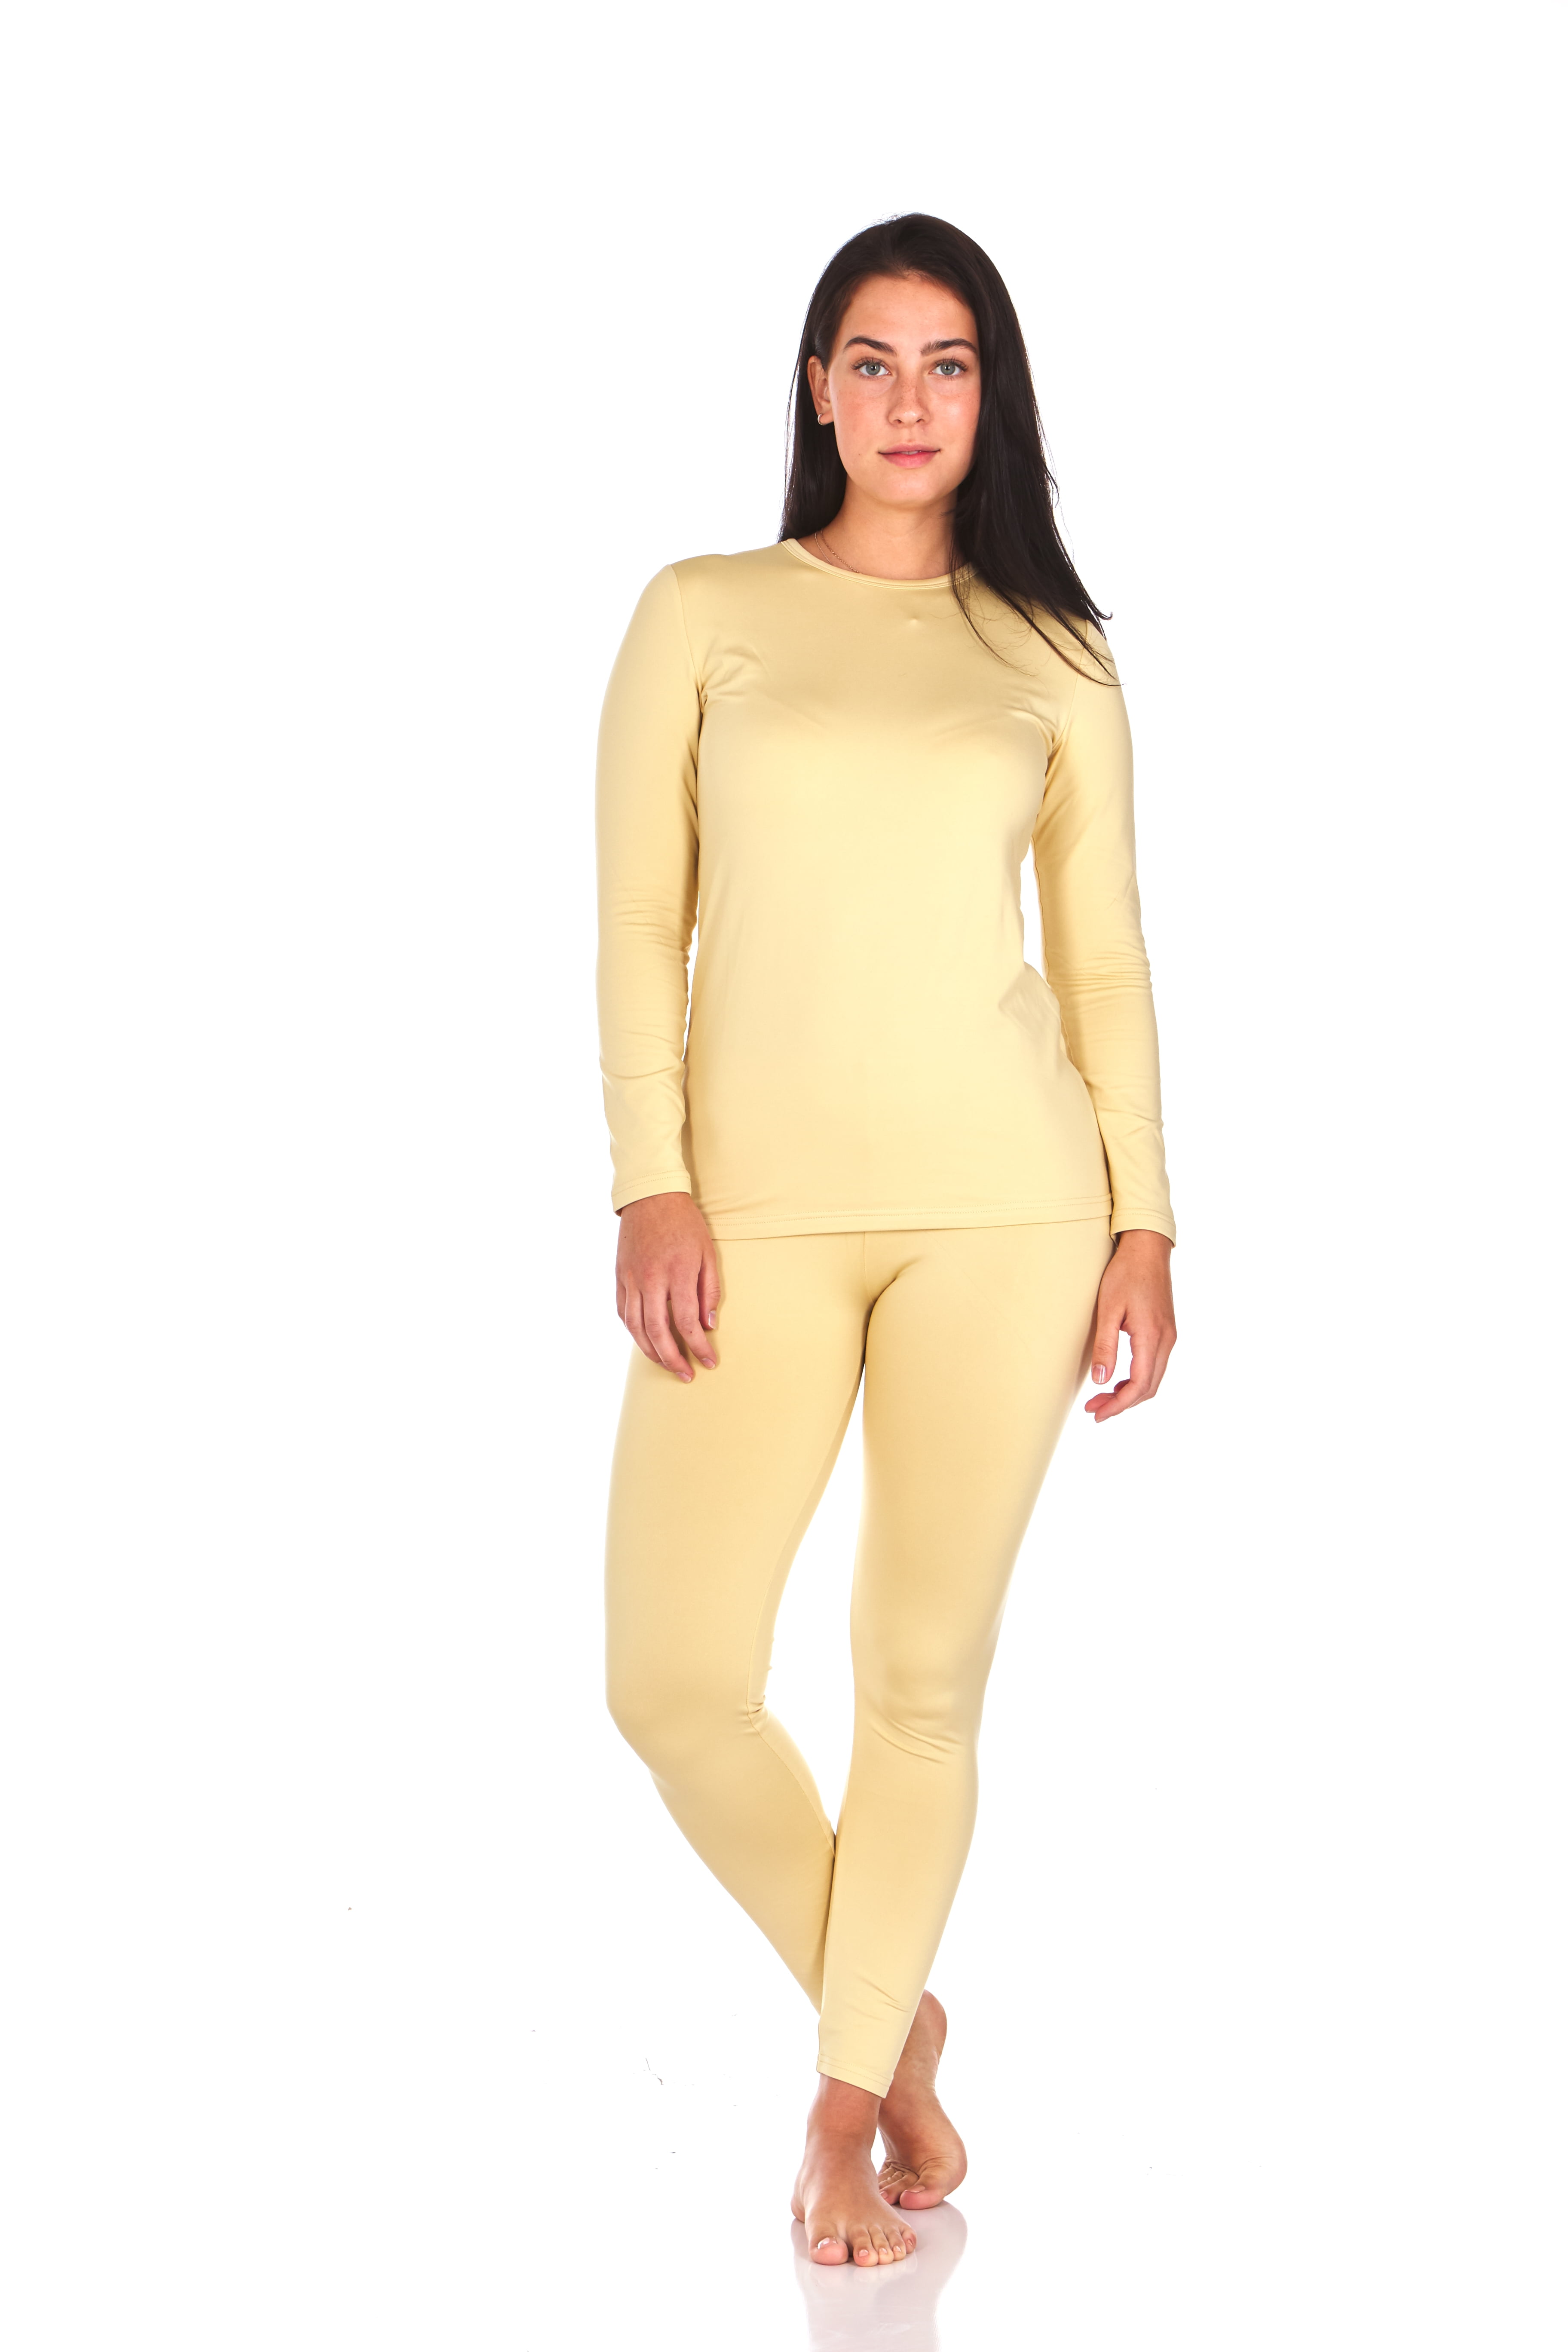 Thermajane Thermal Underwear for Women Crewneck Long Johns Set (Medium,  Yellow) 